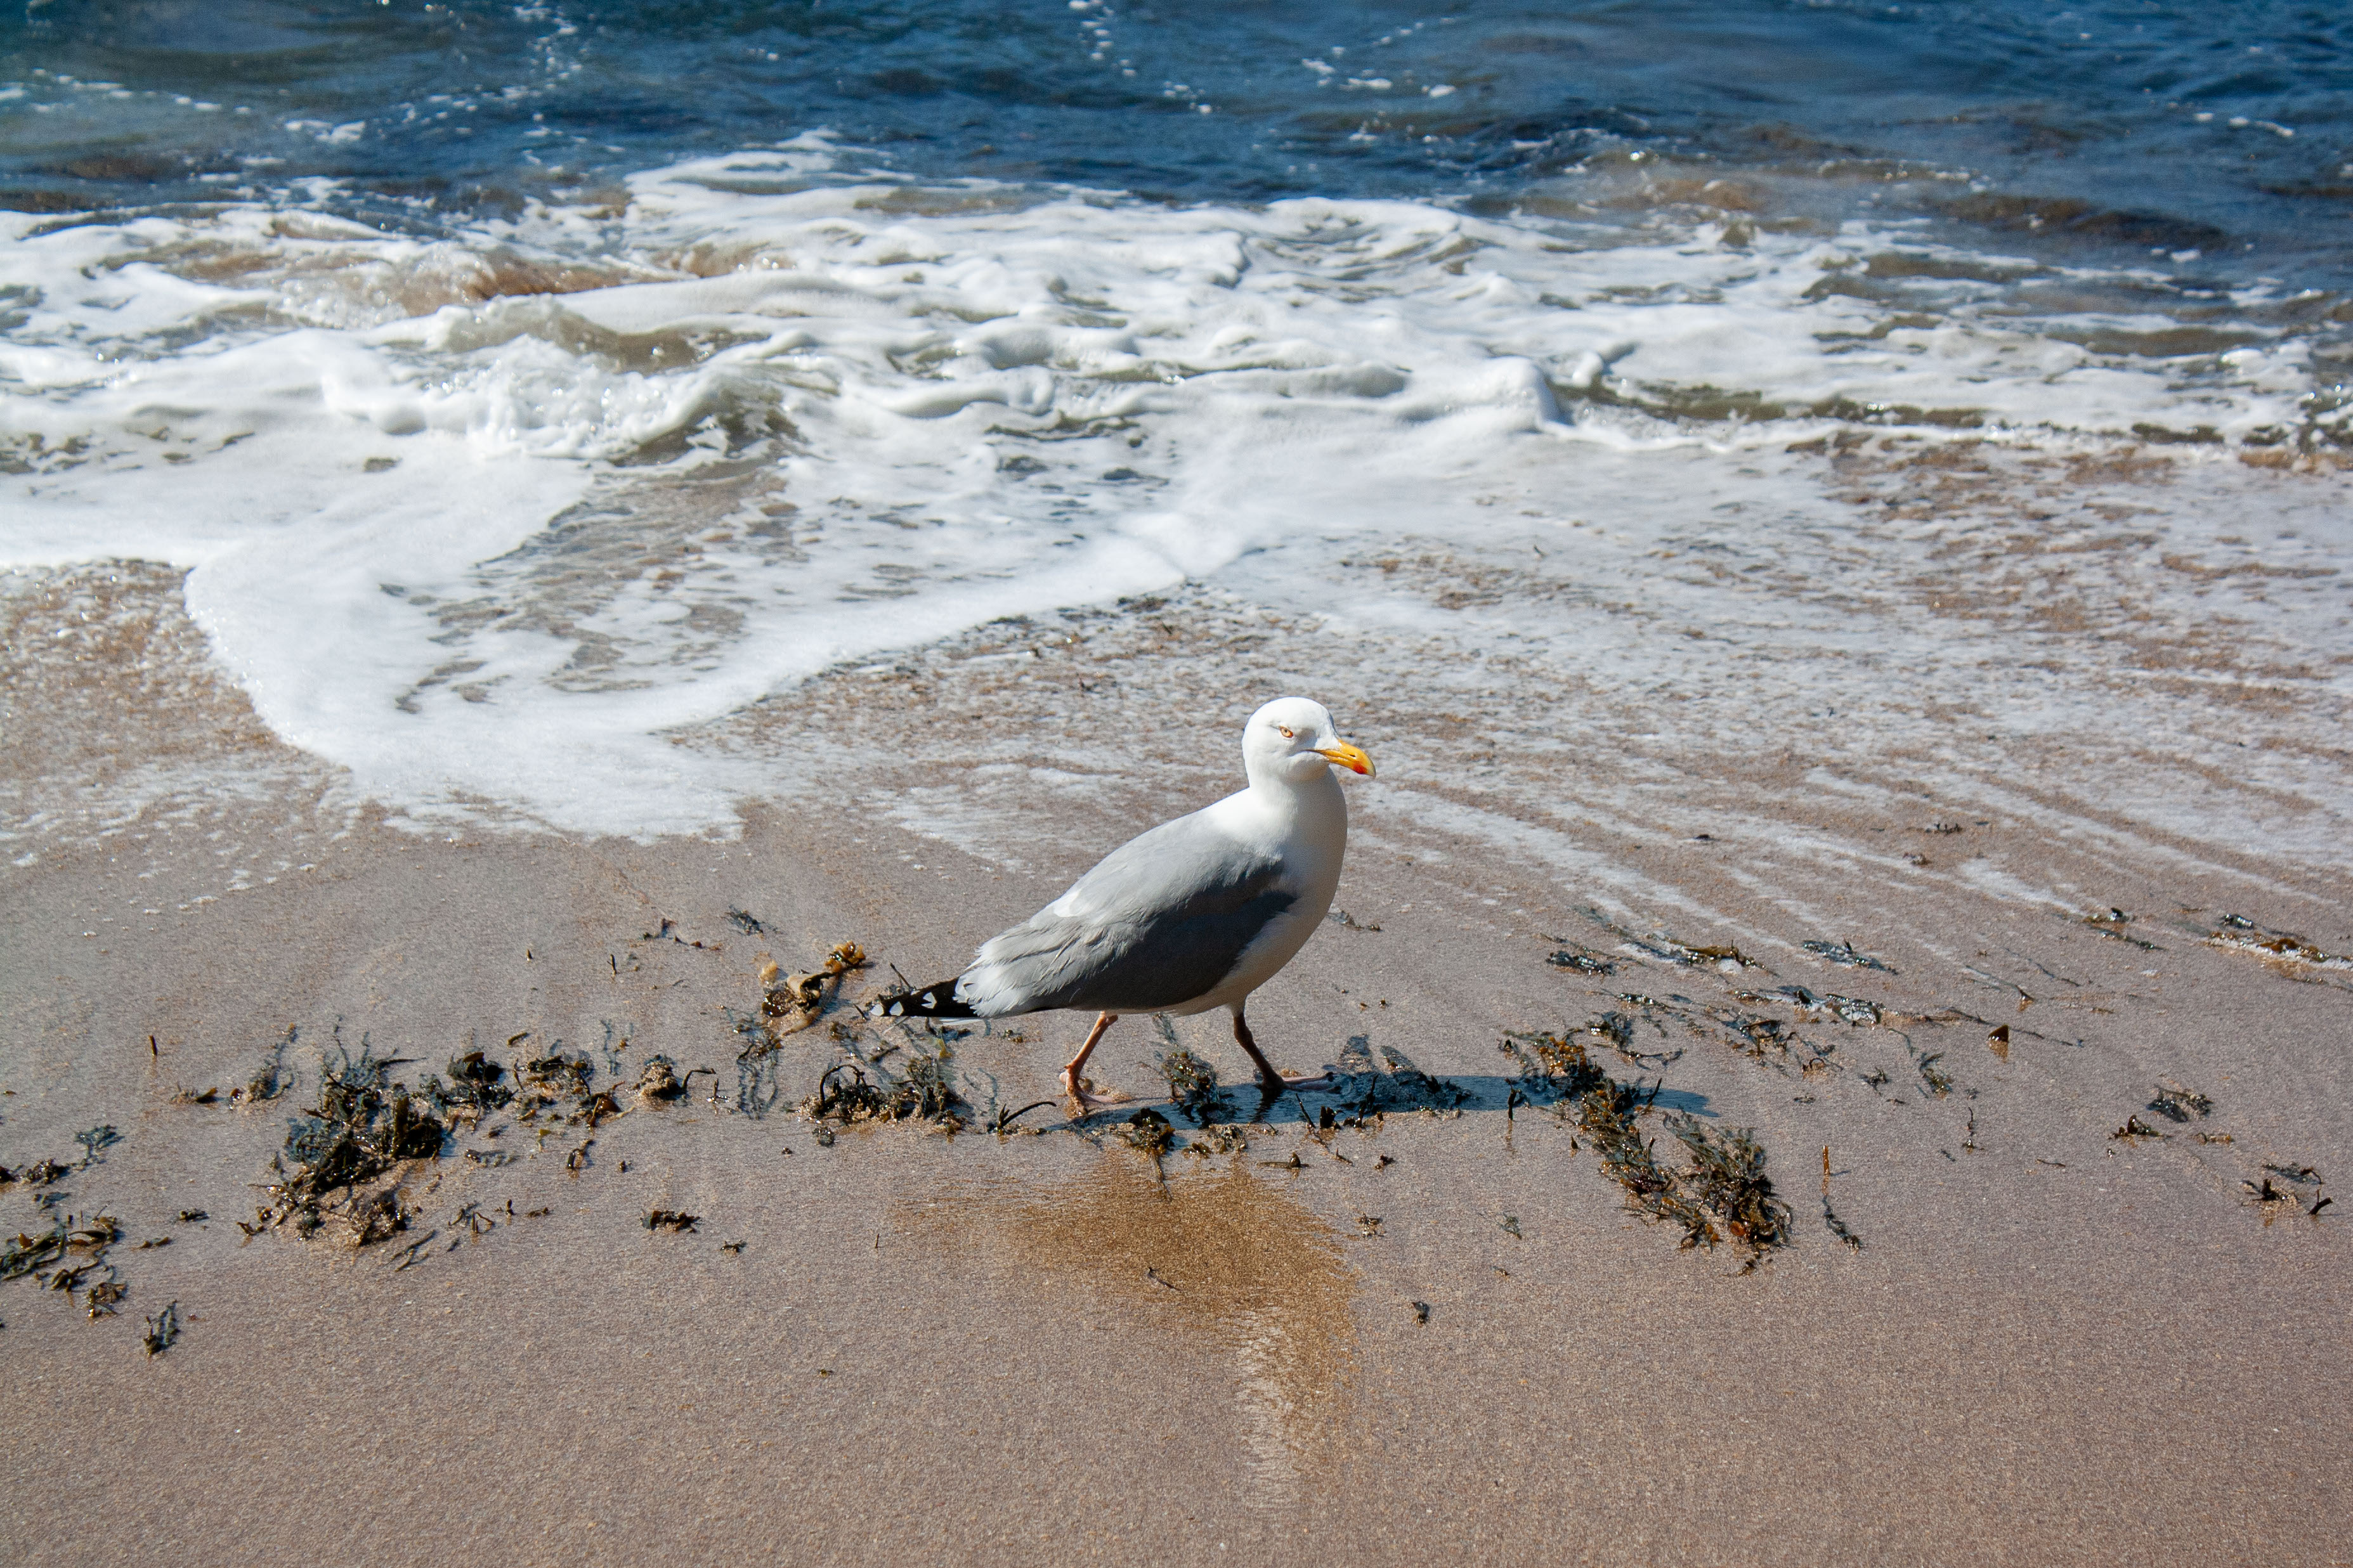 a seagull walking on the beach